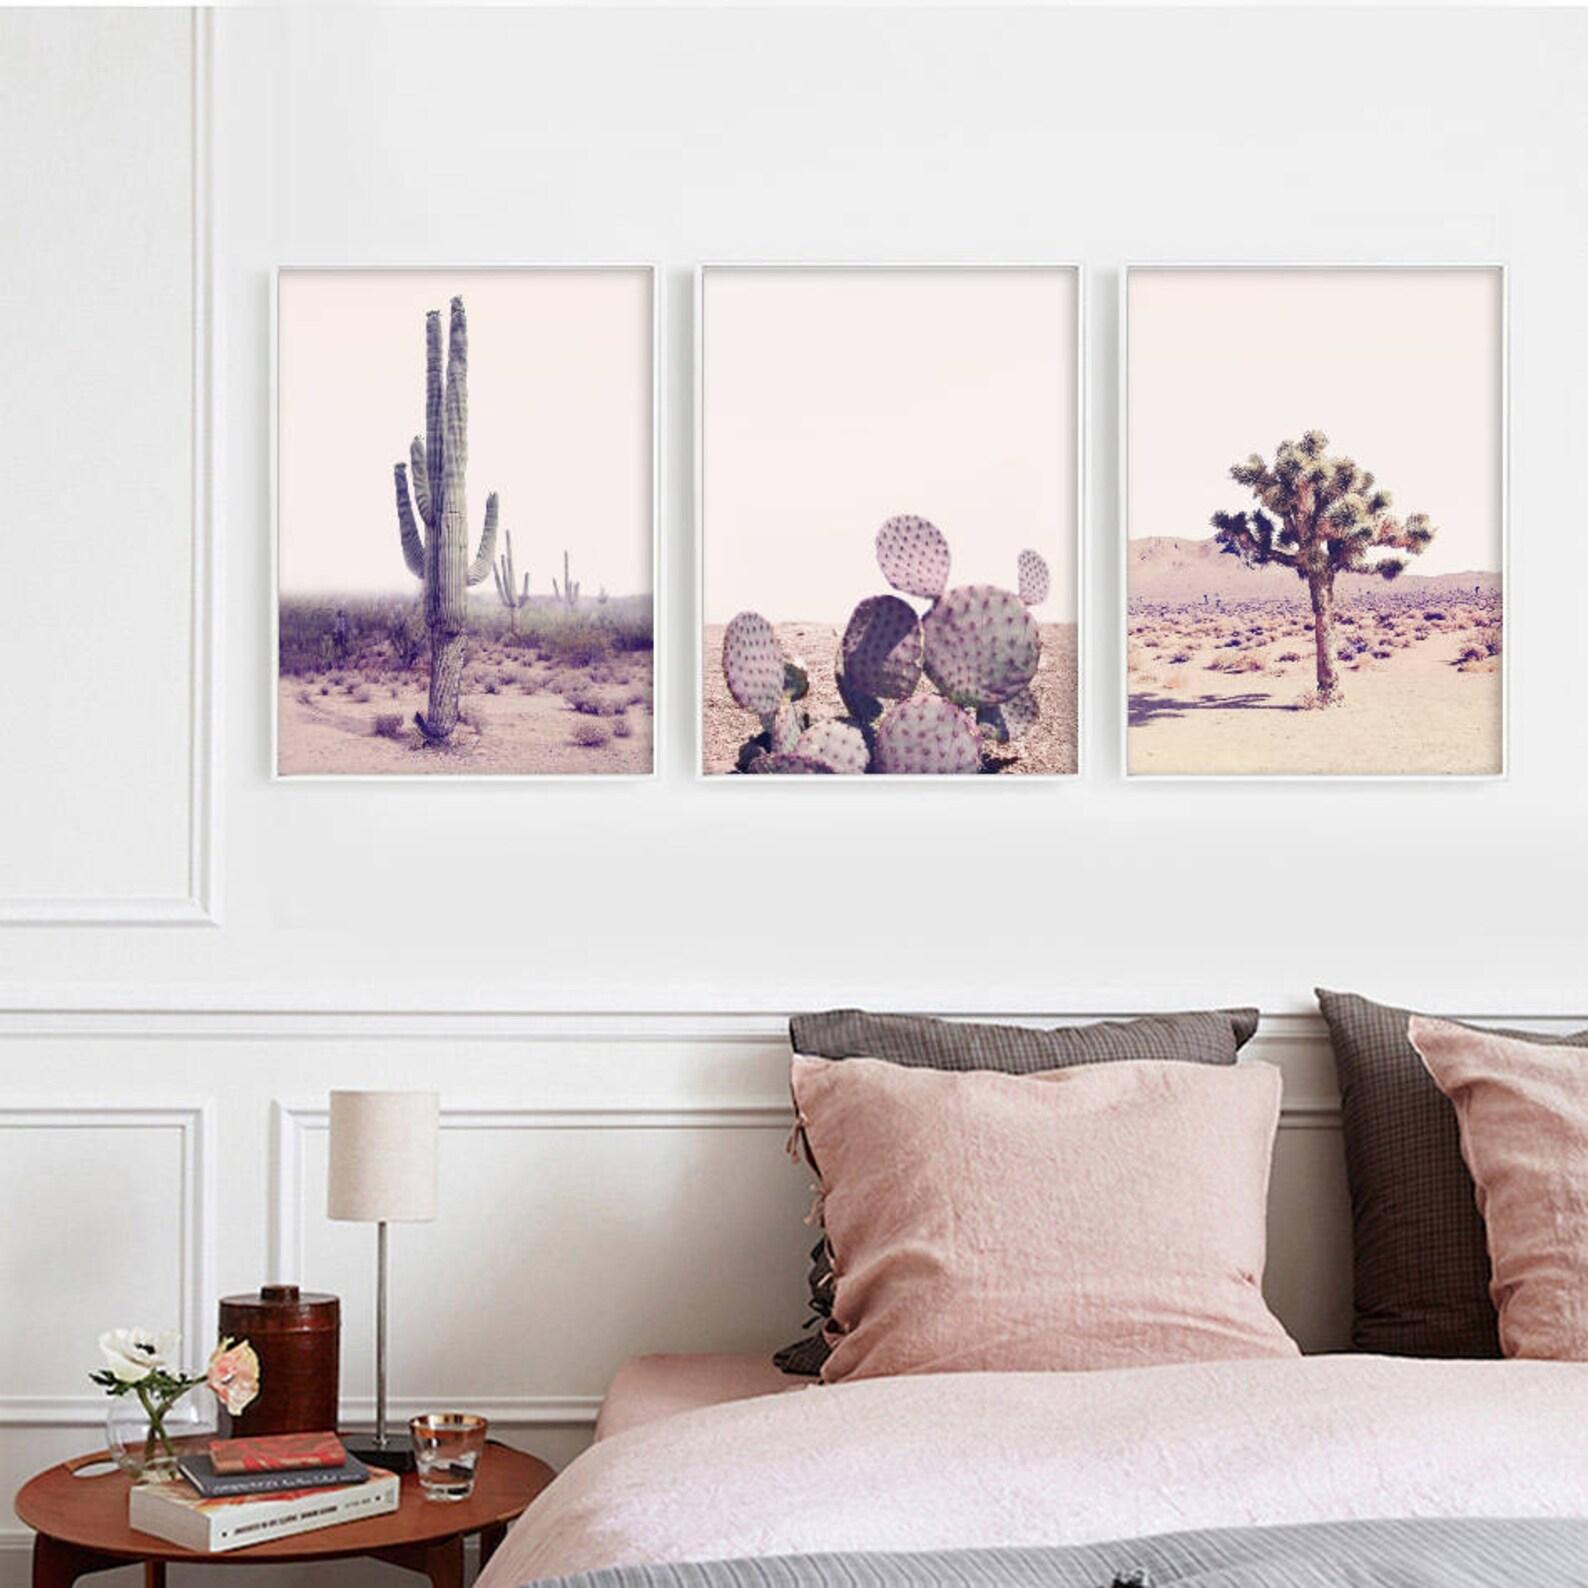 Desert Cactus canvas prints - Print by JPG canvas prints